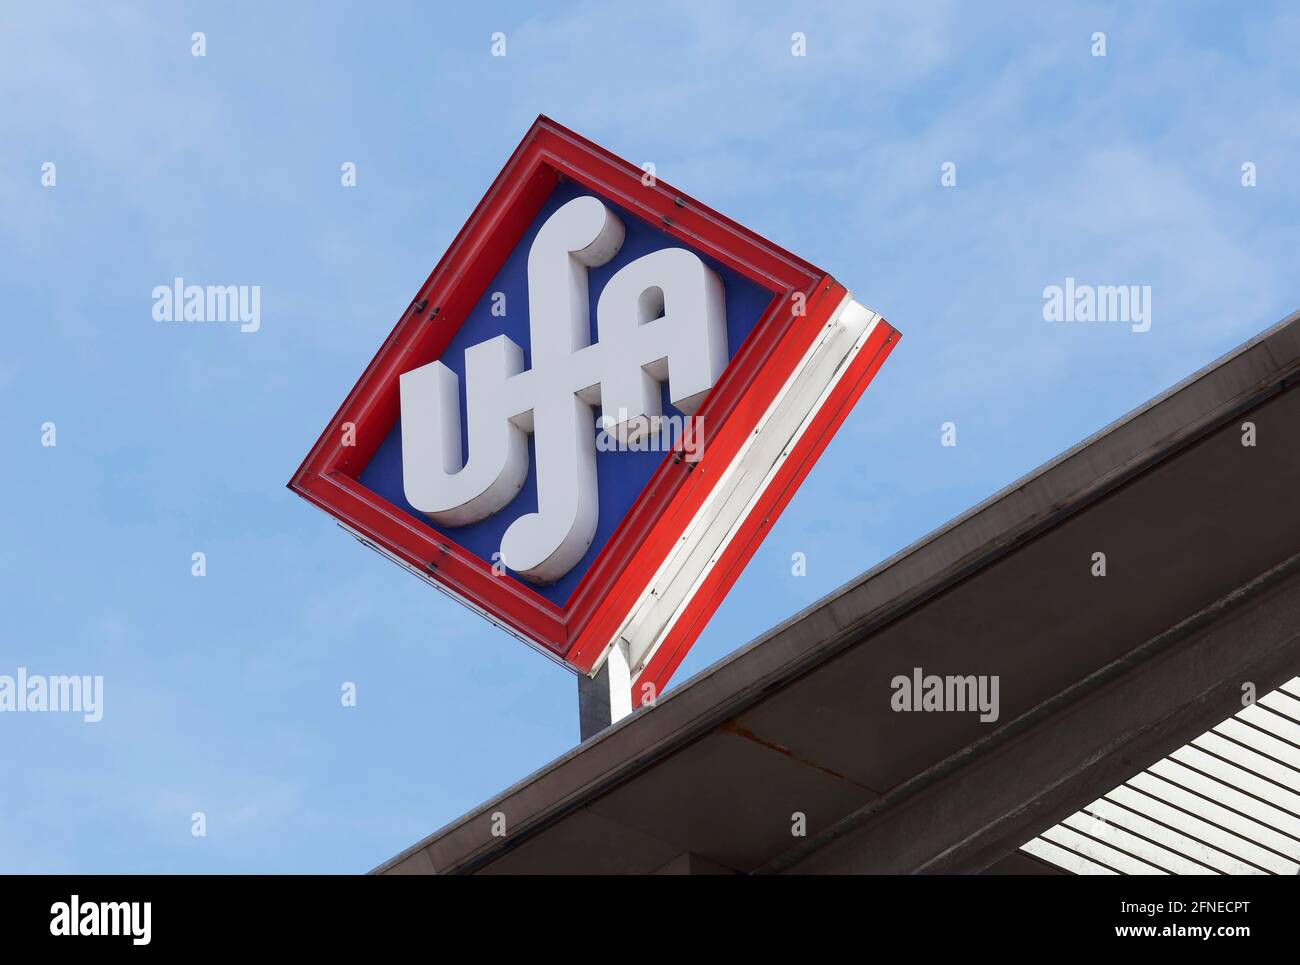 Ufa, logo at the Ufa-Palast Duesseldorf, multiplex cinema, North Rhine-Westphalia, Germany Stock Photo